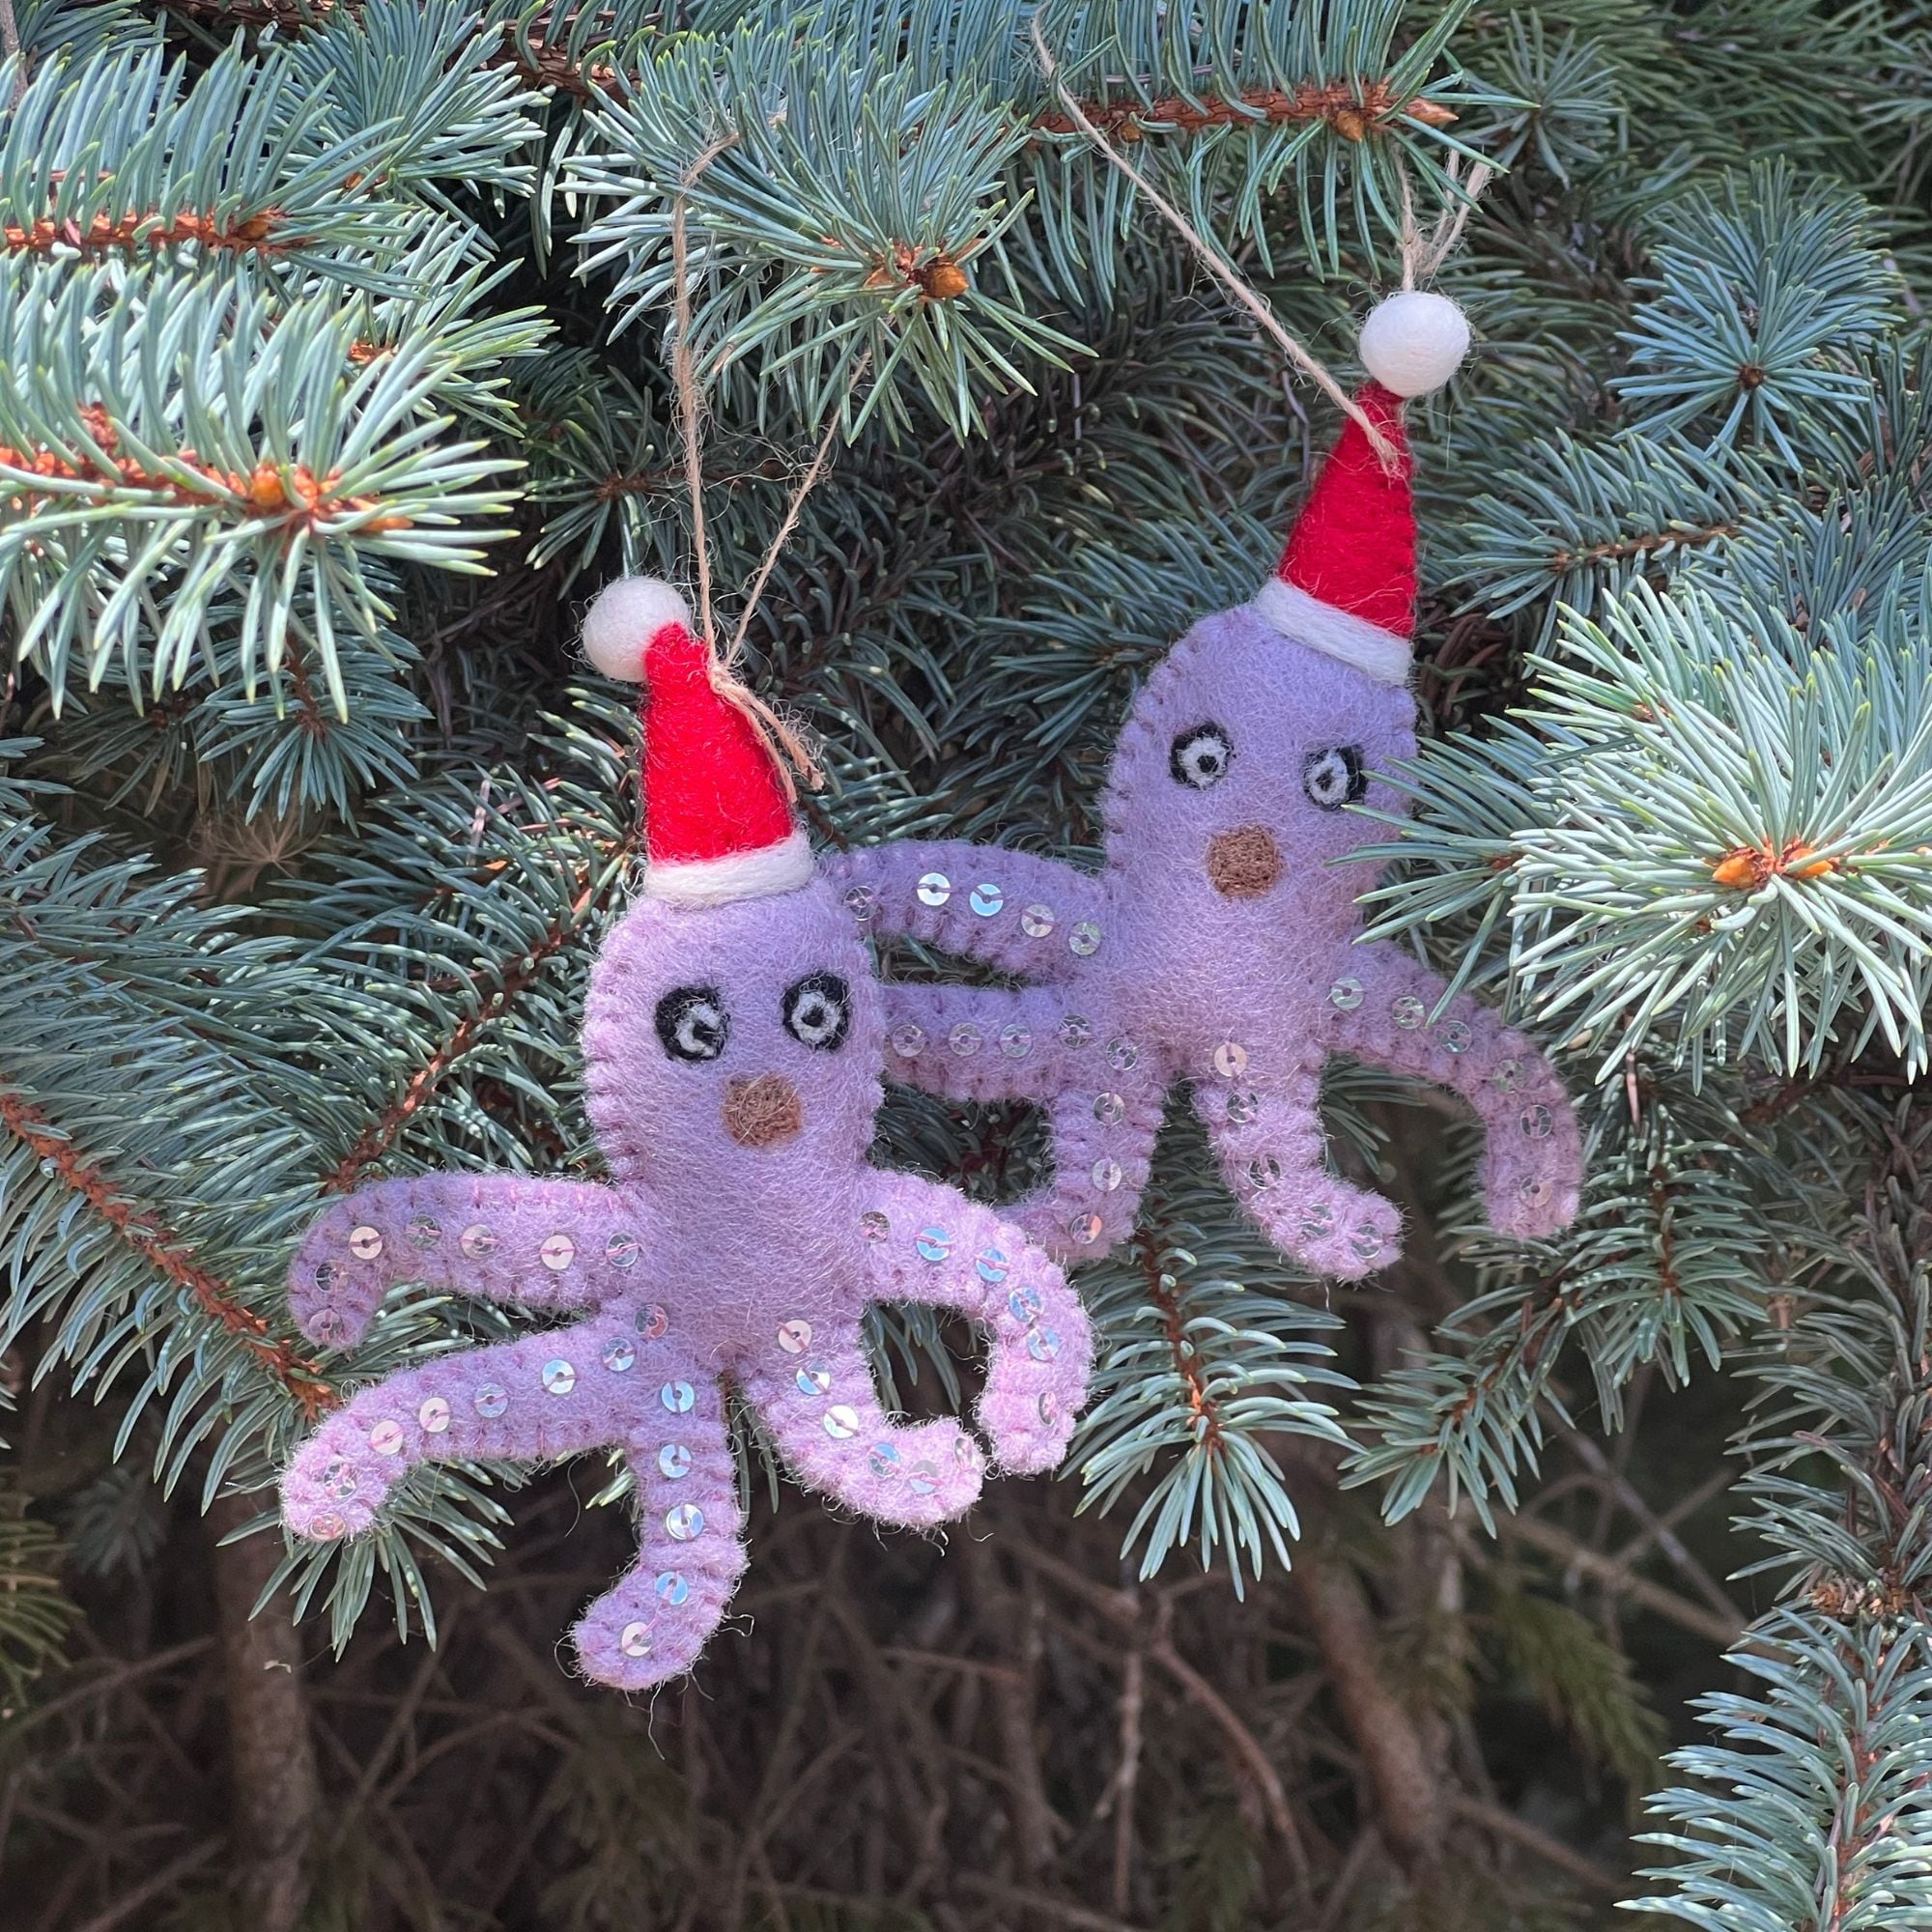 Set of 6 Assorted Hand Made Christmas Ornaments Made Of Felt